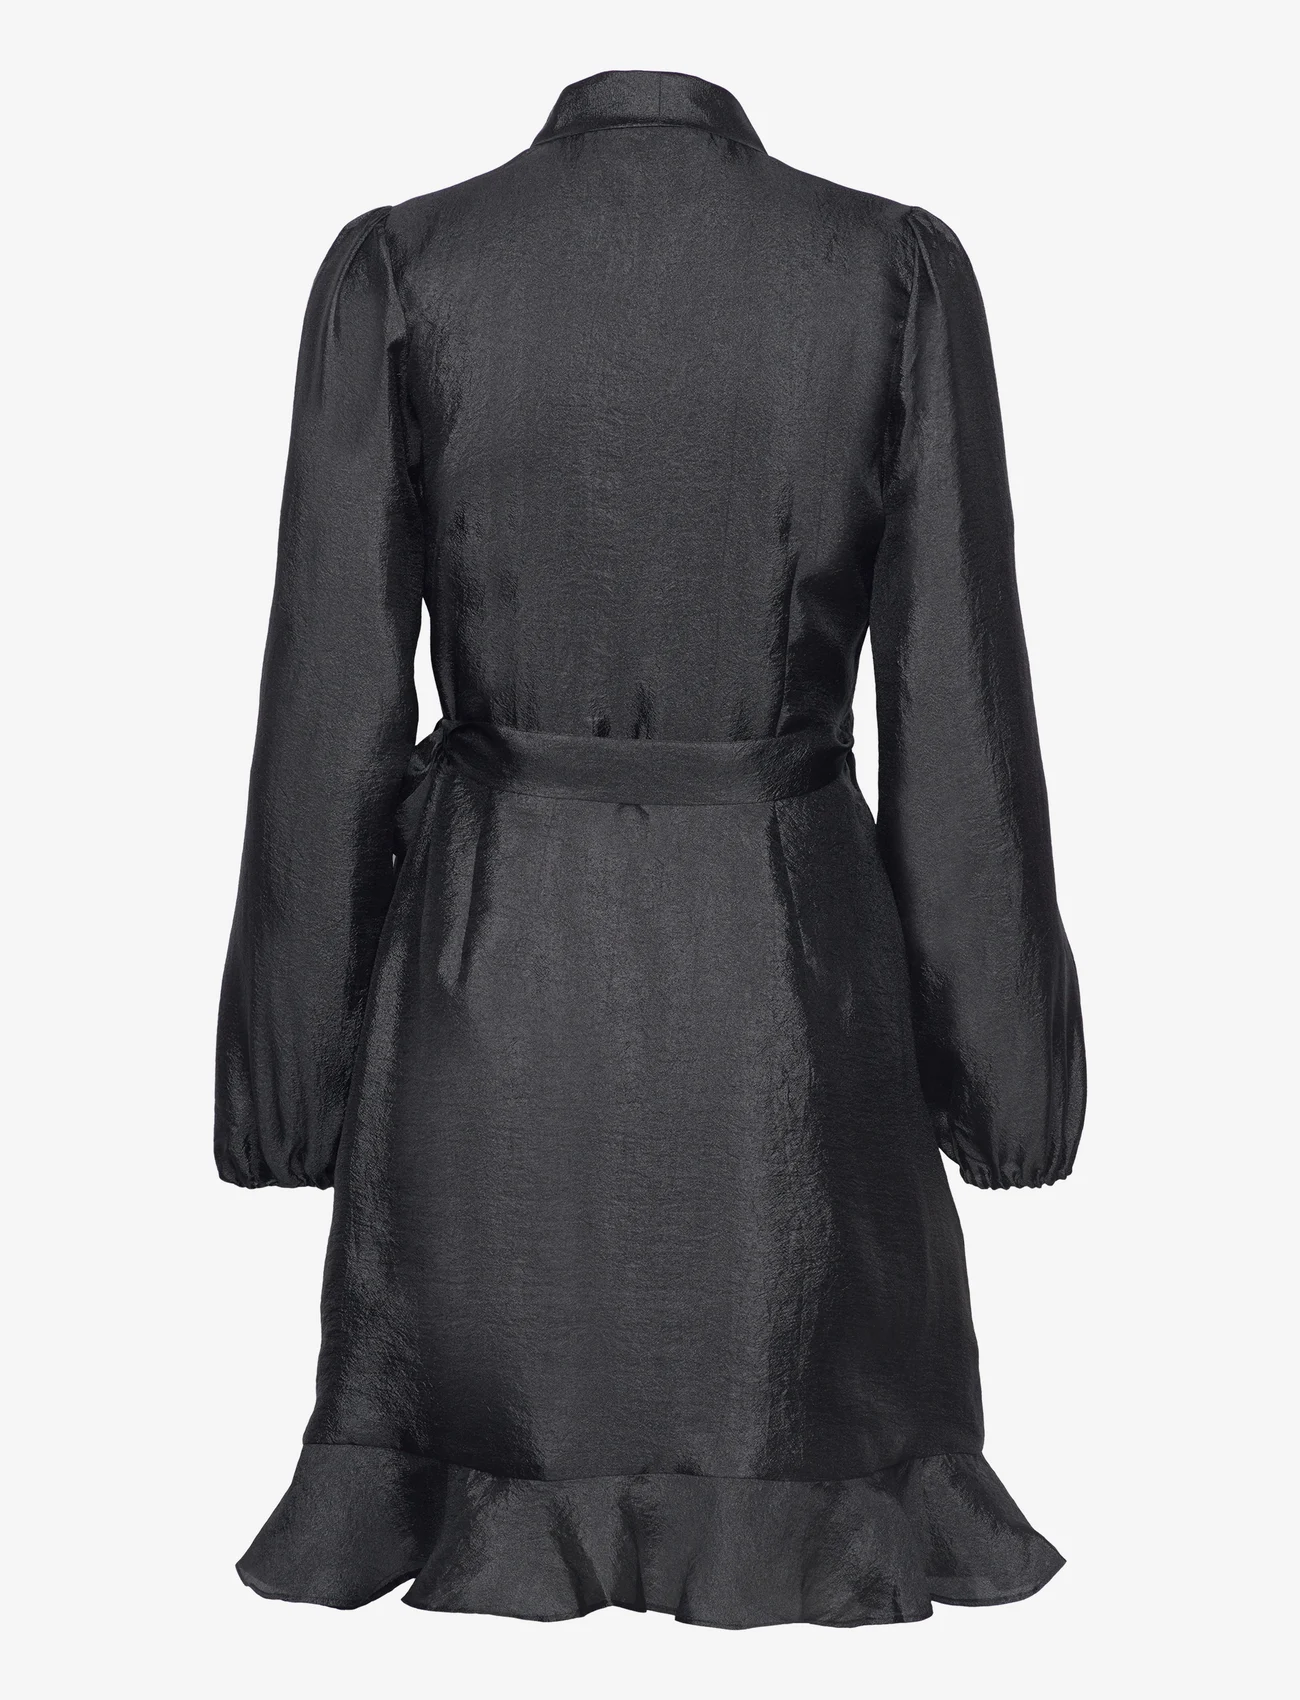 Cras - Lindacras Dress - ballīšu apģērbs par outlet cenām - black - 1